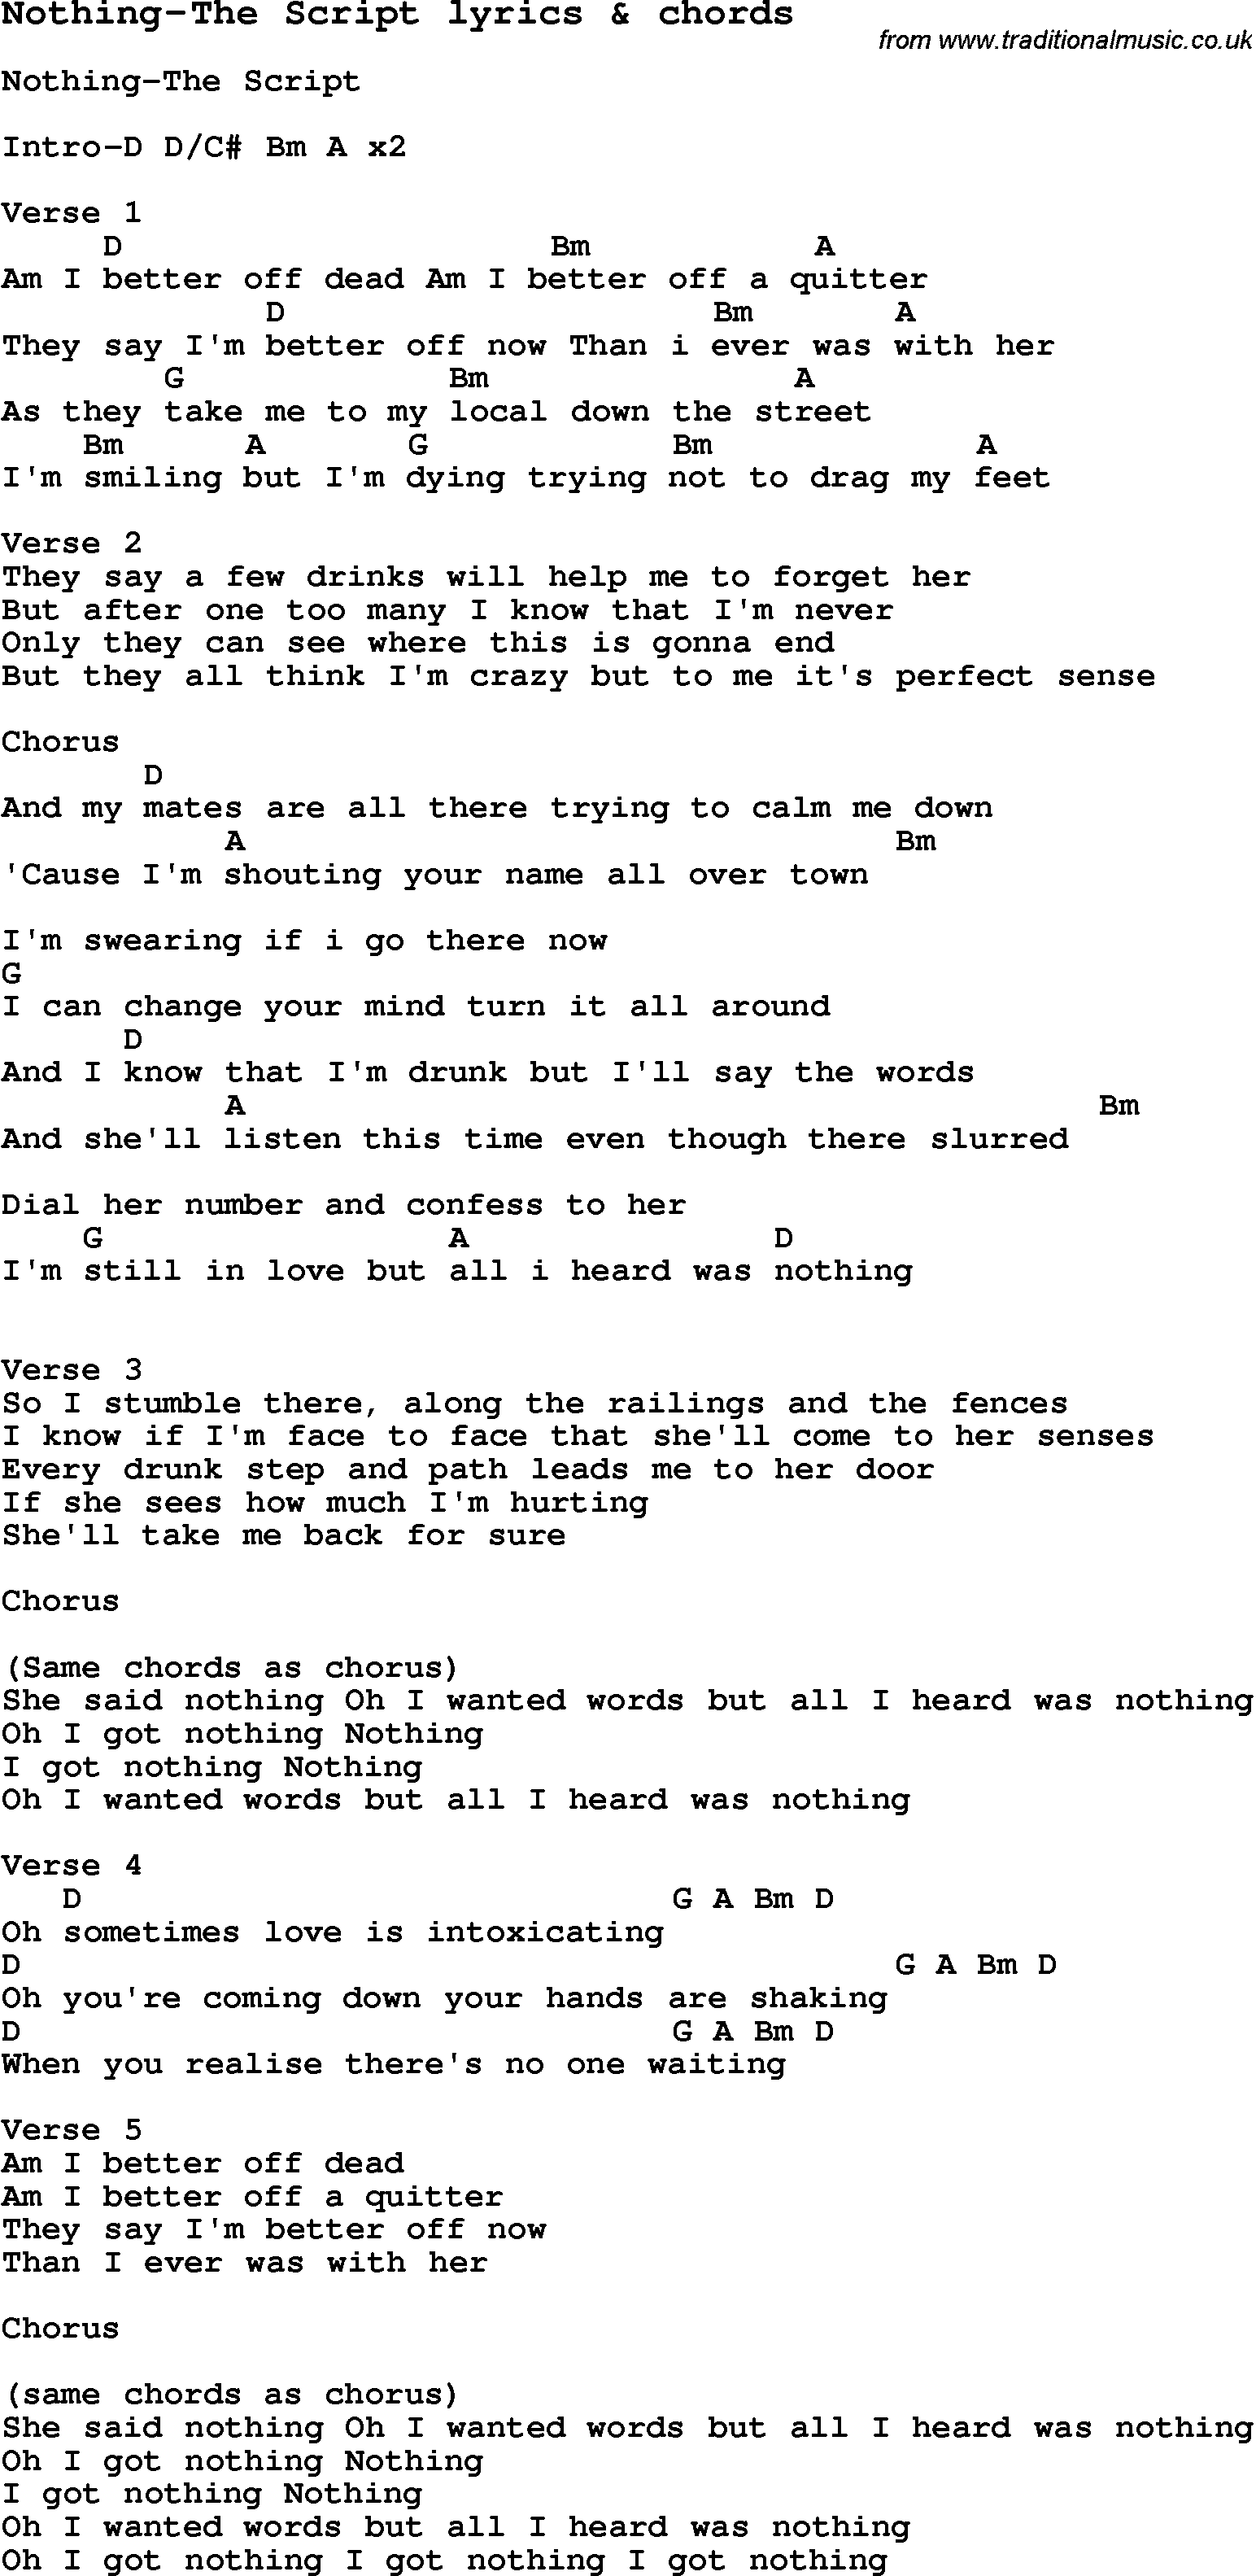 Love Song Lyrics for: Nothing-The Script with chords for Ukulele, Guitar Banjo etc.